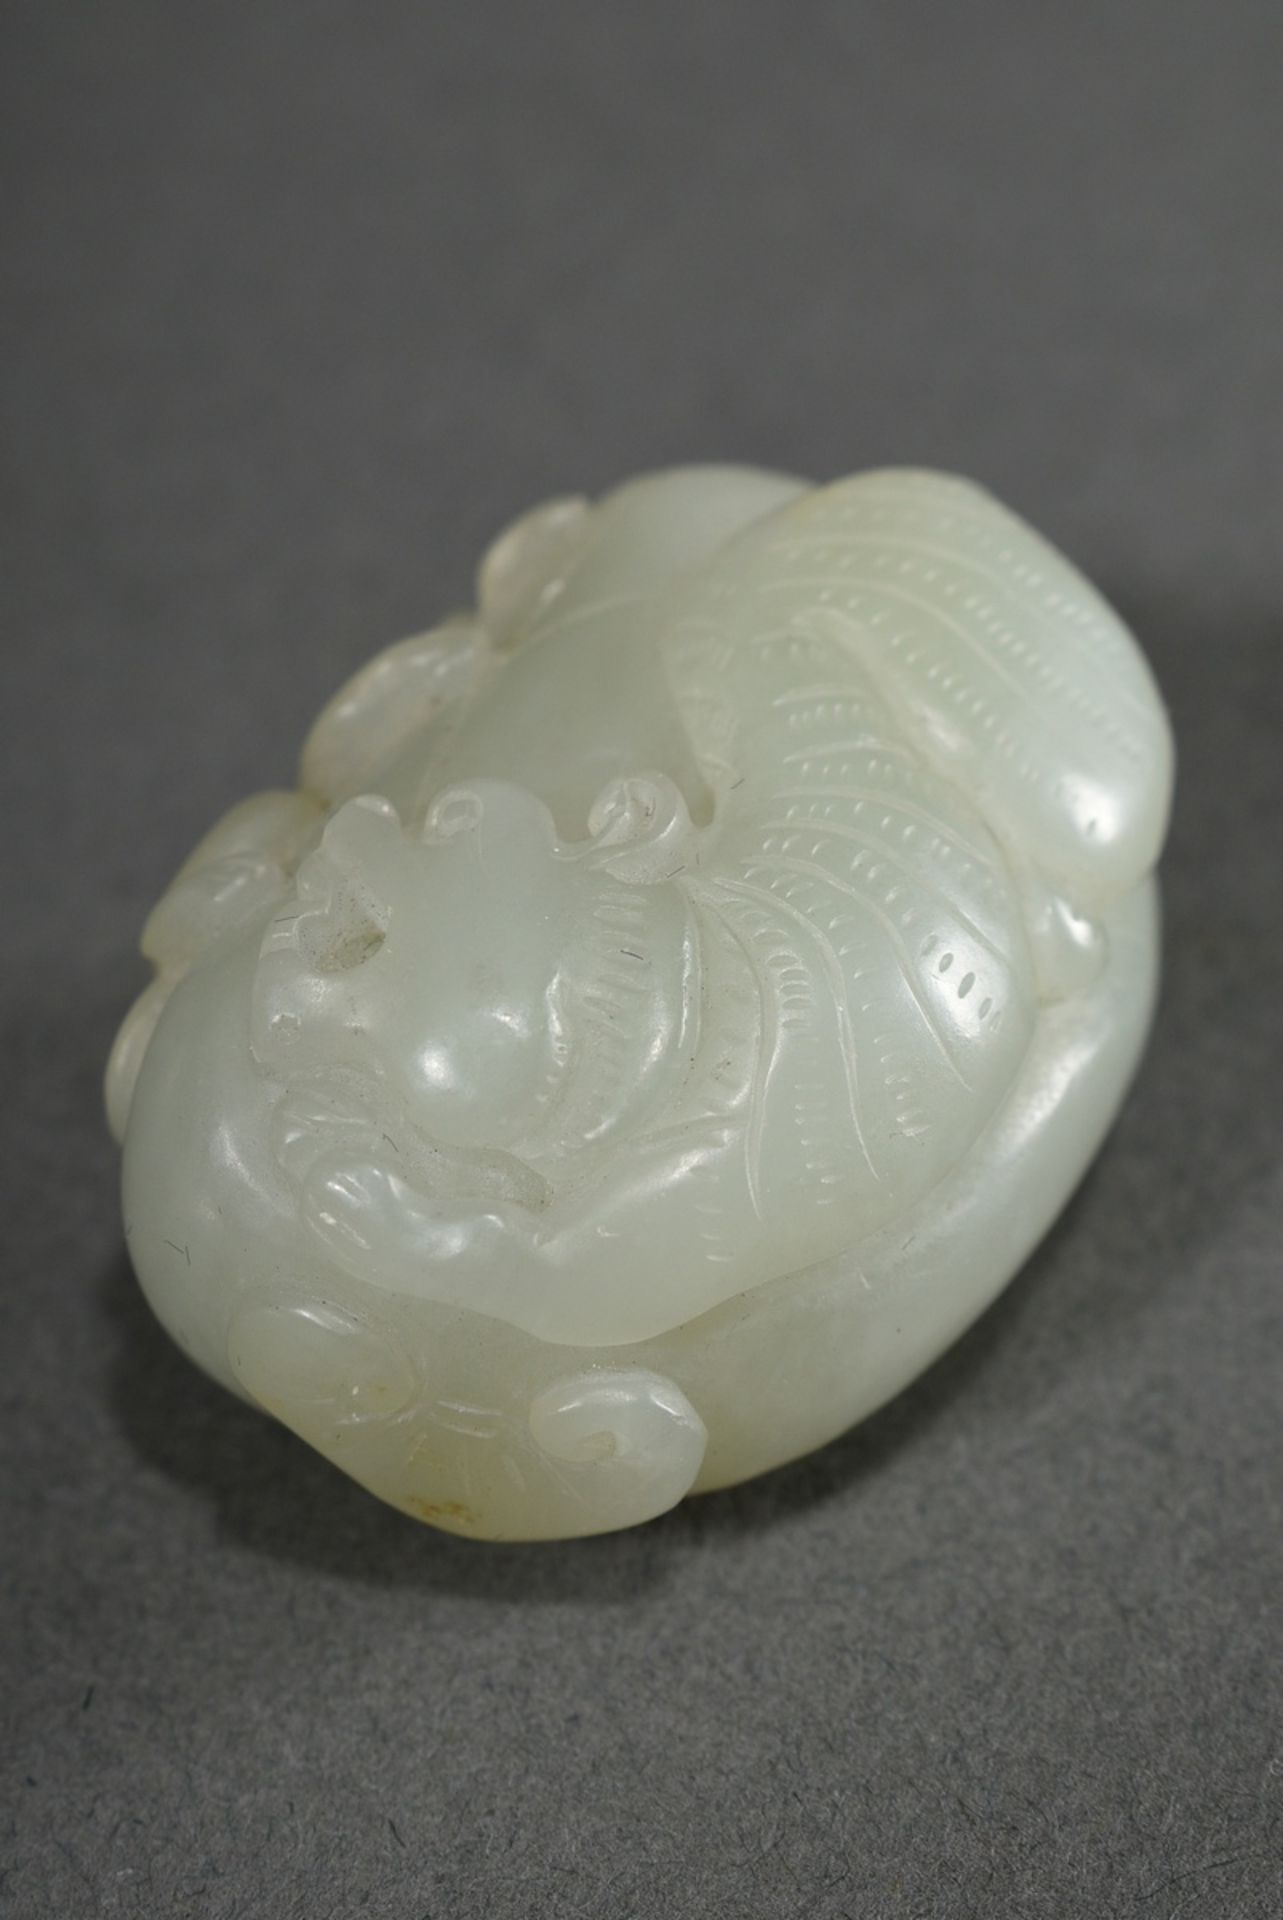 Fine celadon jade toggle "Tiger and monkey on rocks", China, 3.7x2.5x1.9cm - Image 4 of 4